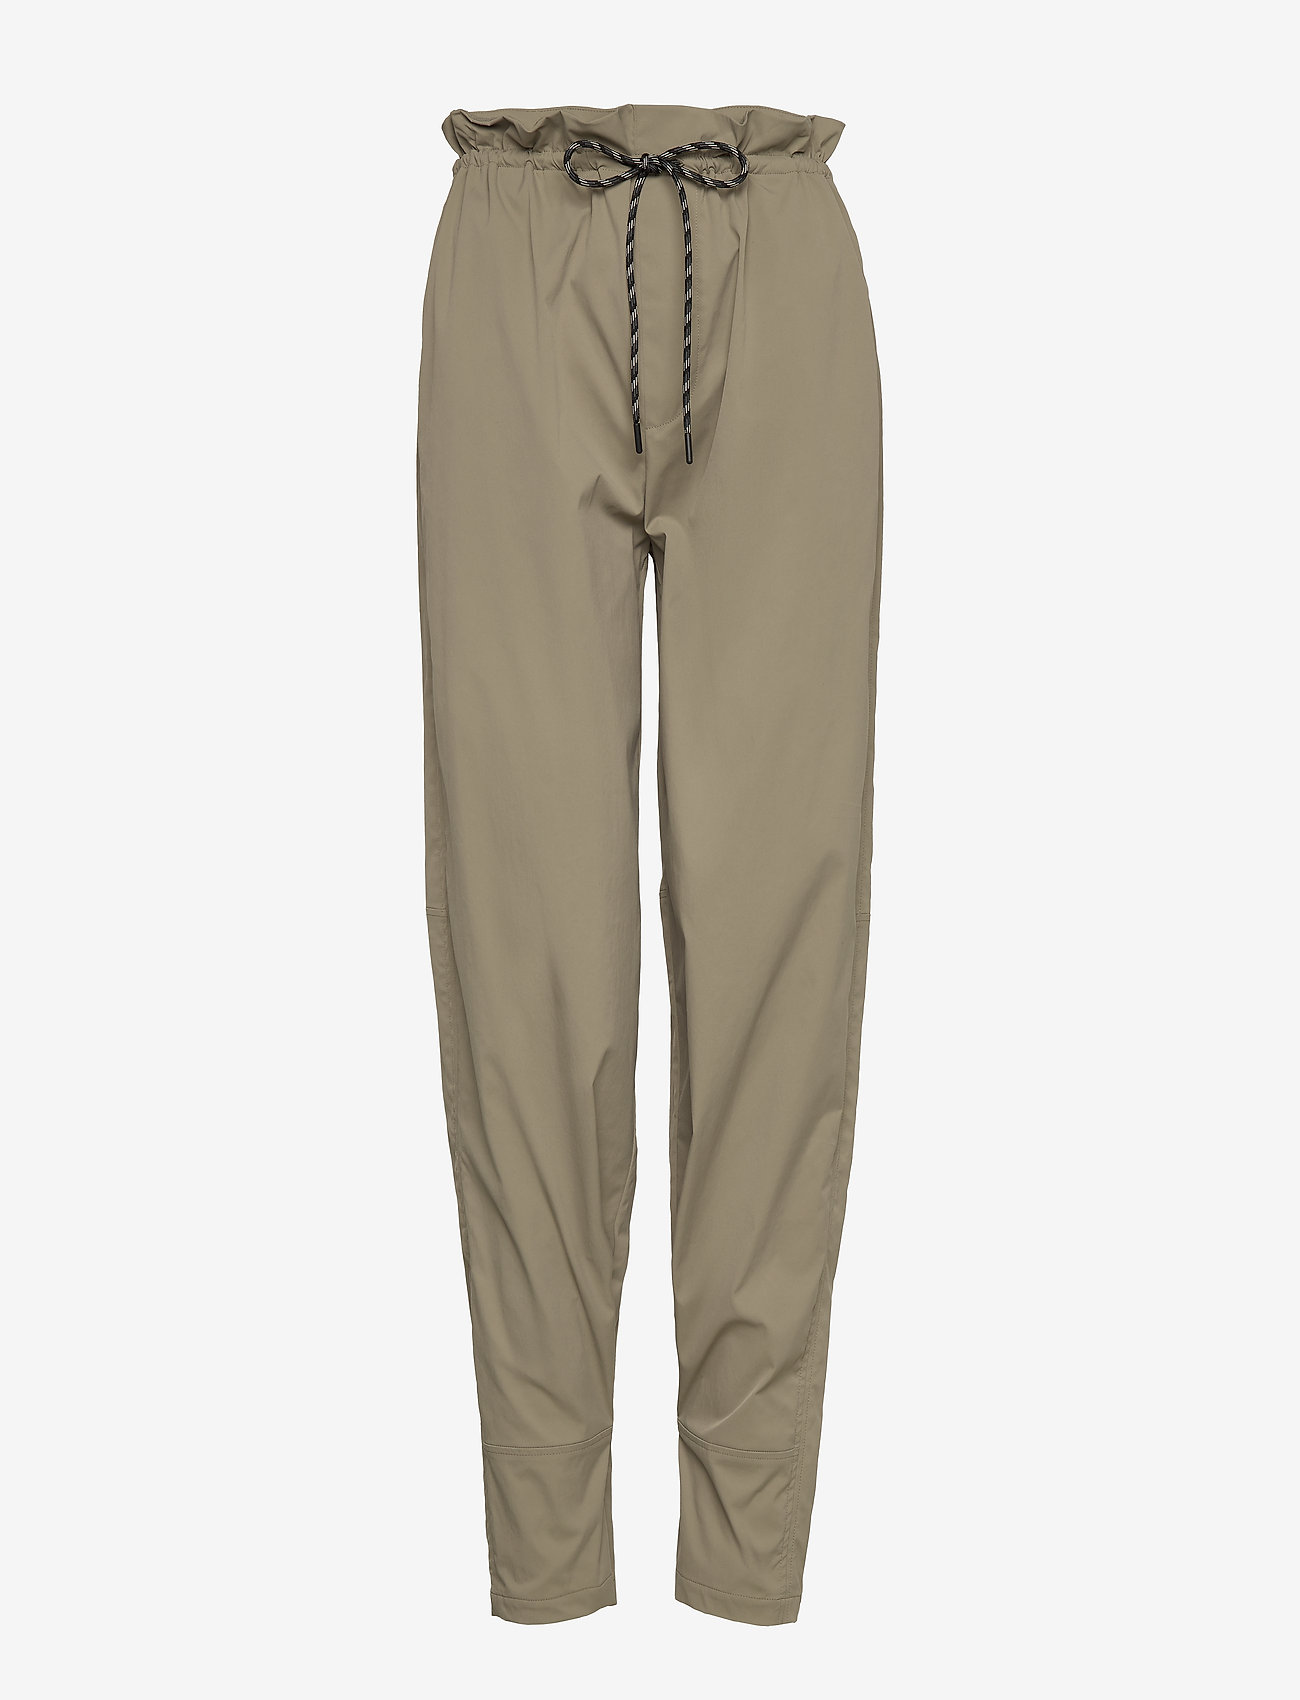 Filippa K - Dance Trouser - straight leg trousers - grey taupe - 1